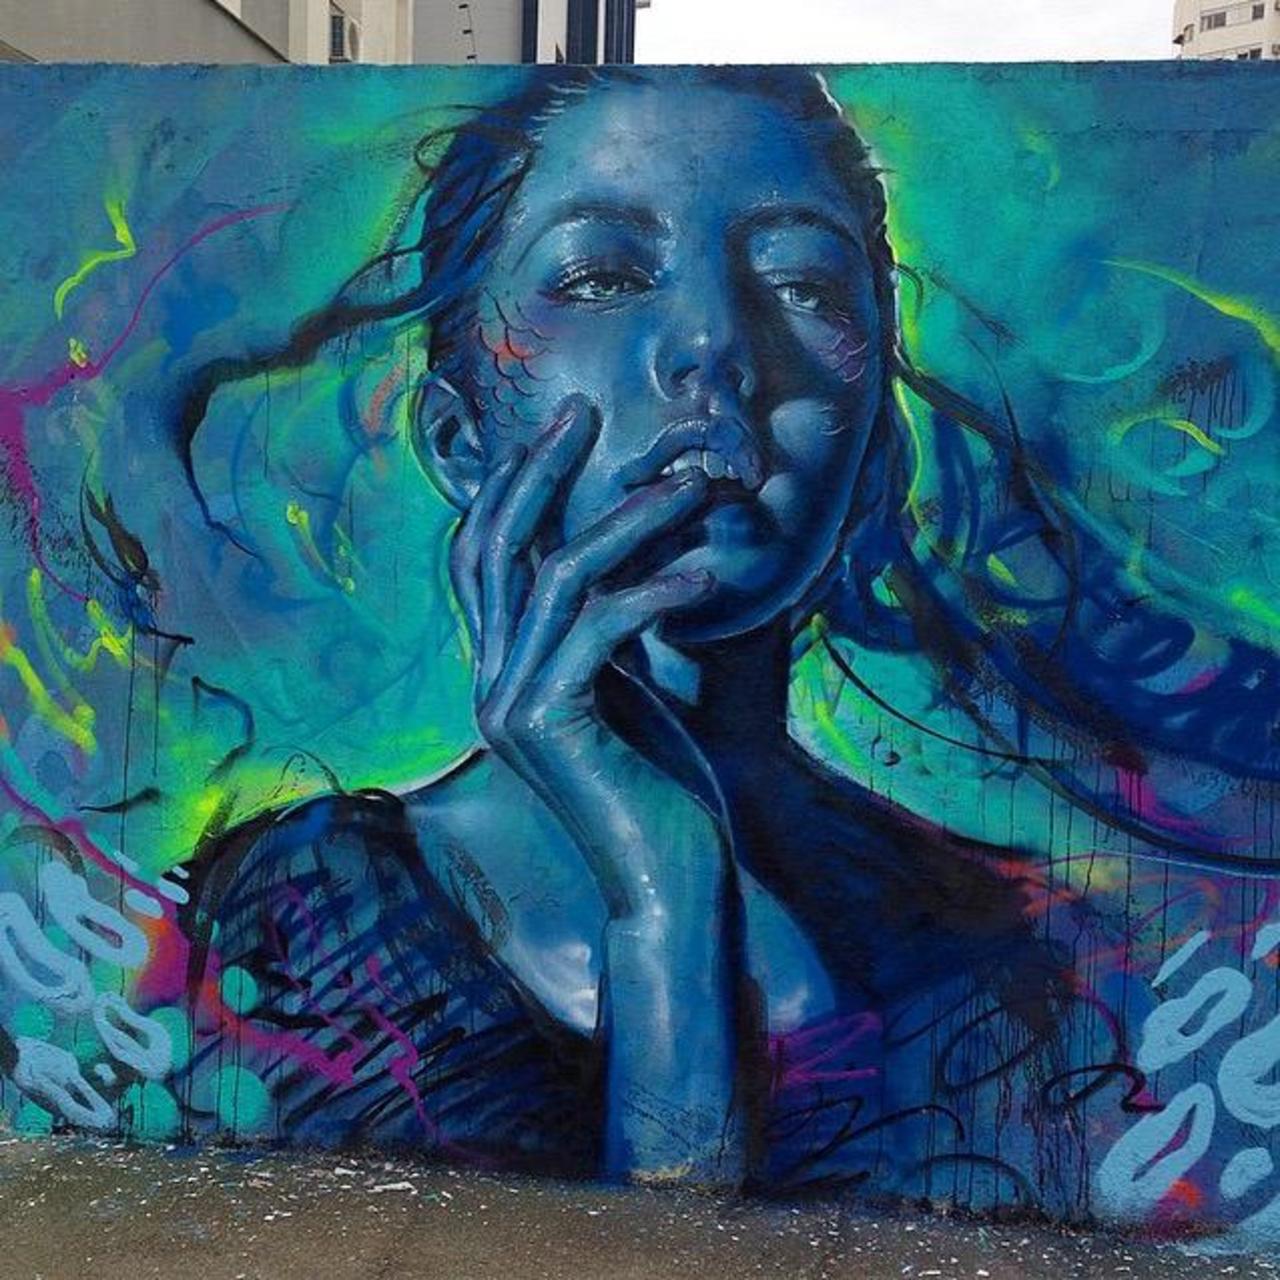 Thiago Valdi new Street Art piece titled 'Day Dreamer'

#art #mural #graffiti #streetart http://t.co/SQ4g1dANfW